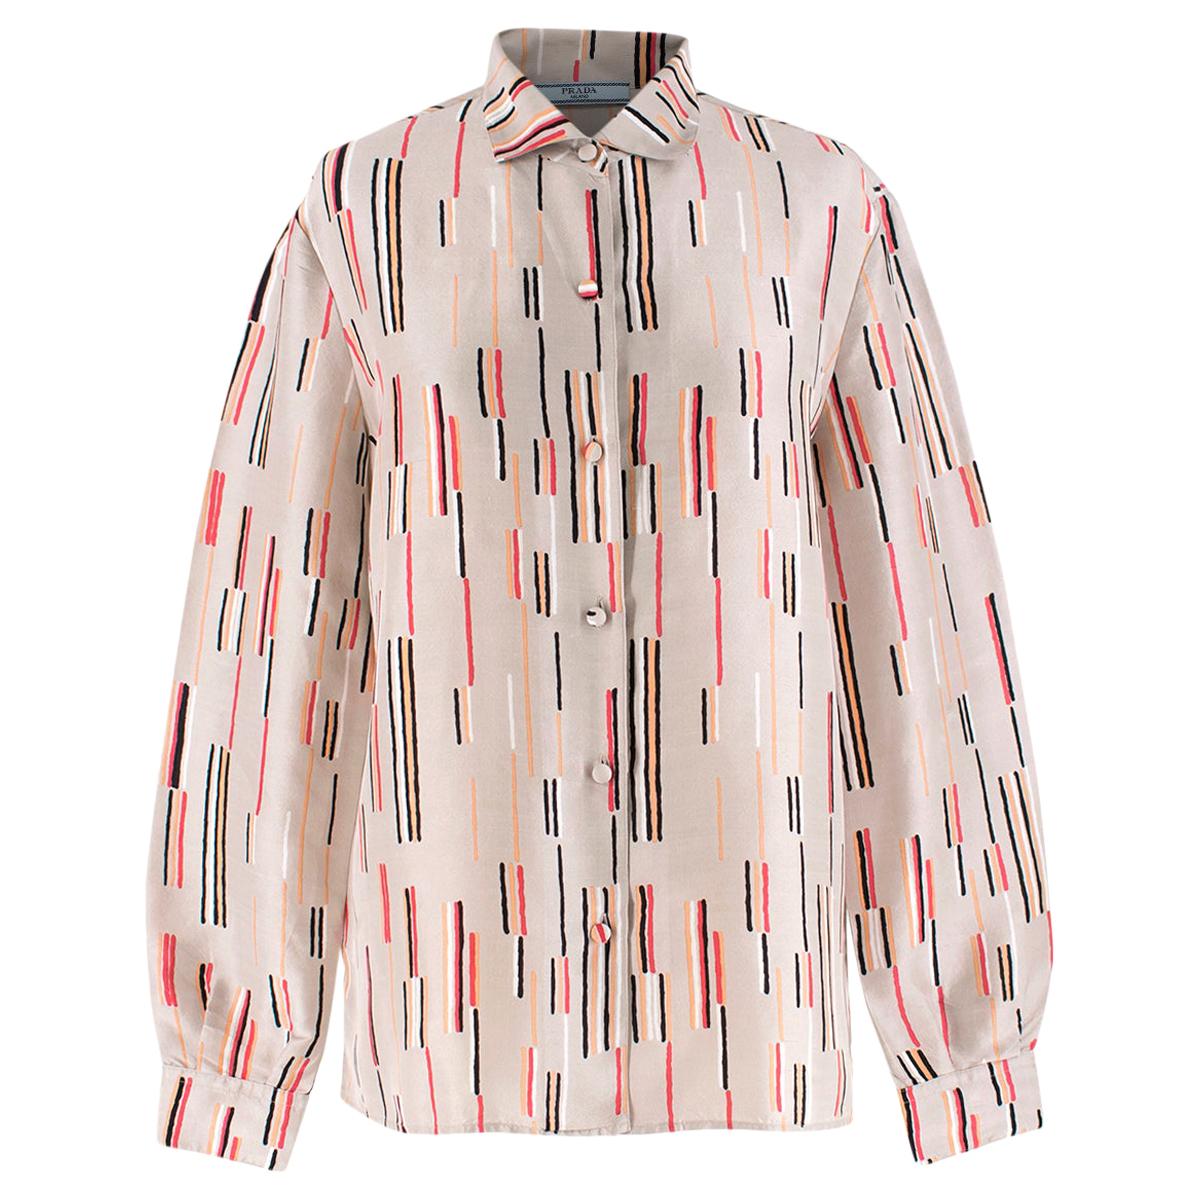 Prada Silk Nude Multi-coloured Line Patterned Shirt (IT) 42 